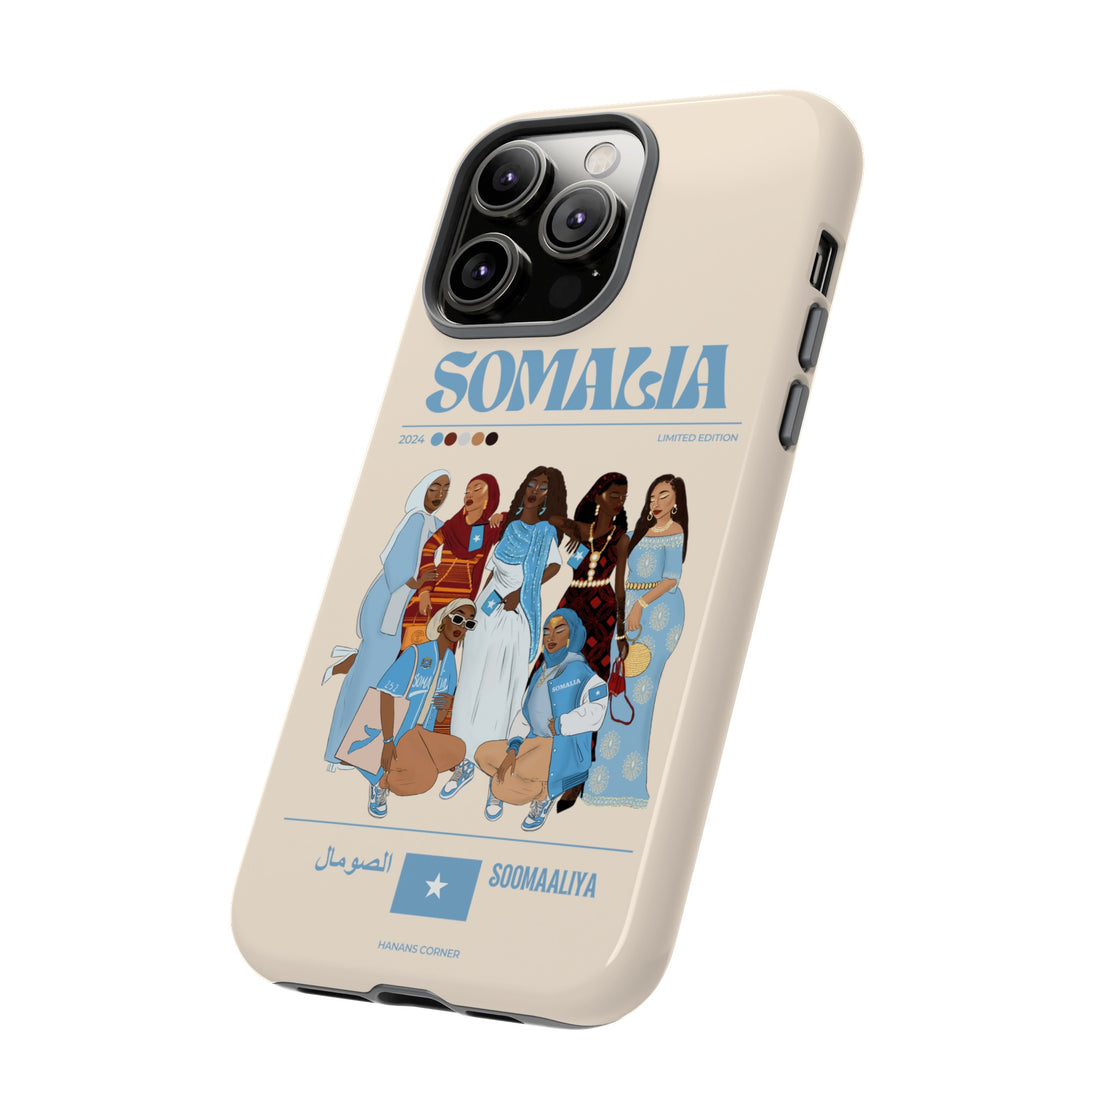 Somalia x Streetwear - Phone Case